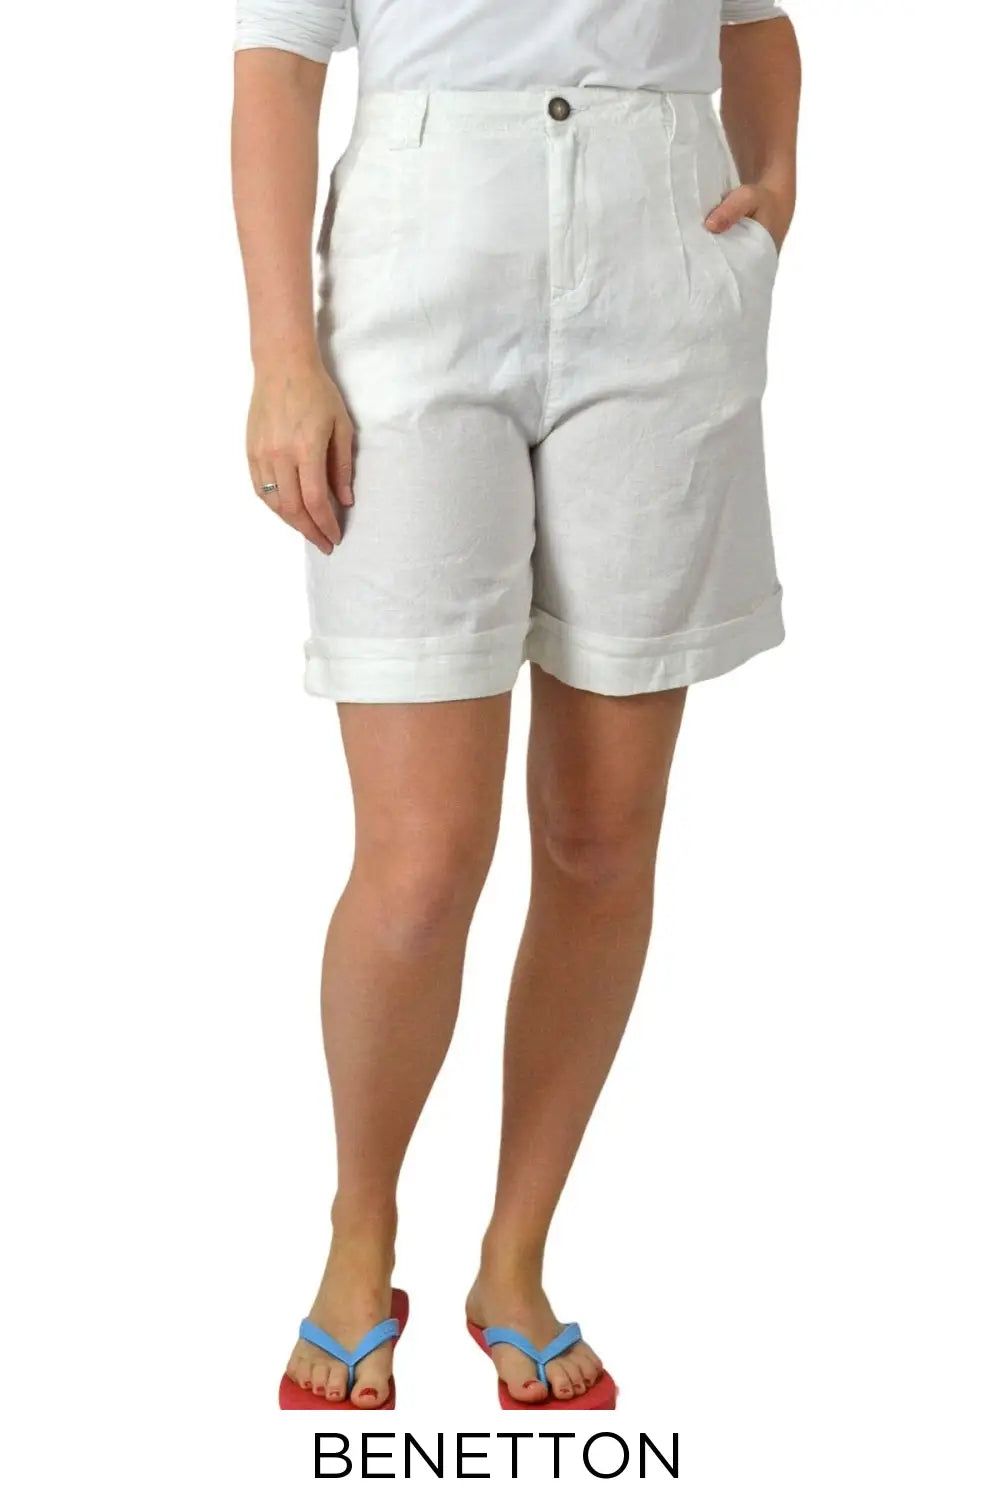 Benetton Long Cotton Bermuda Shorts White / 8